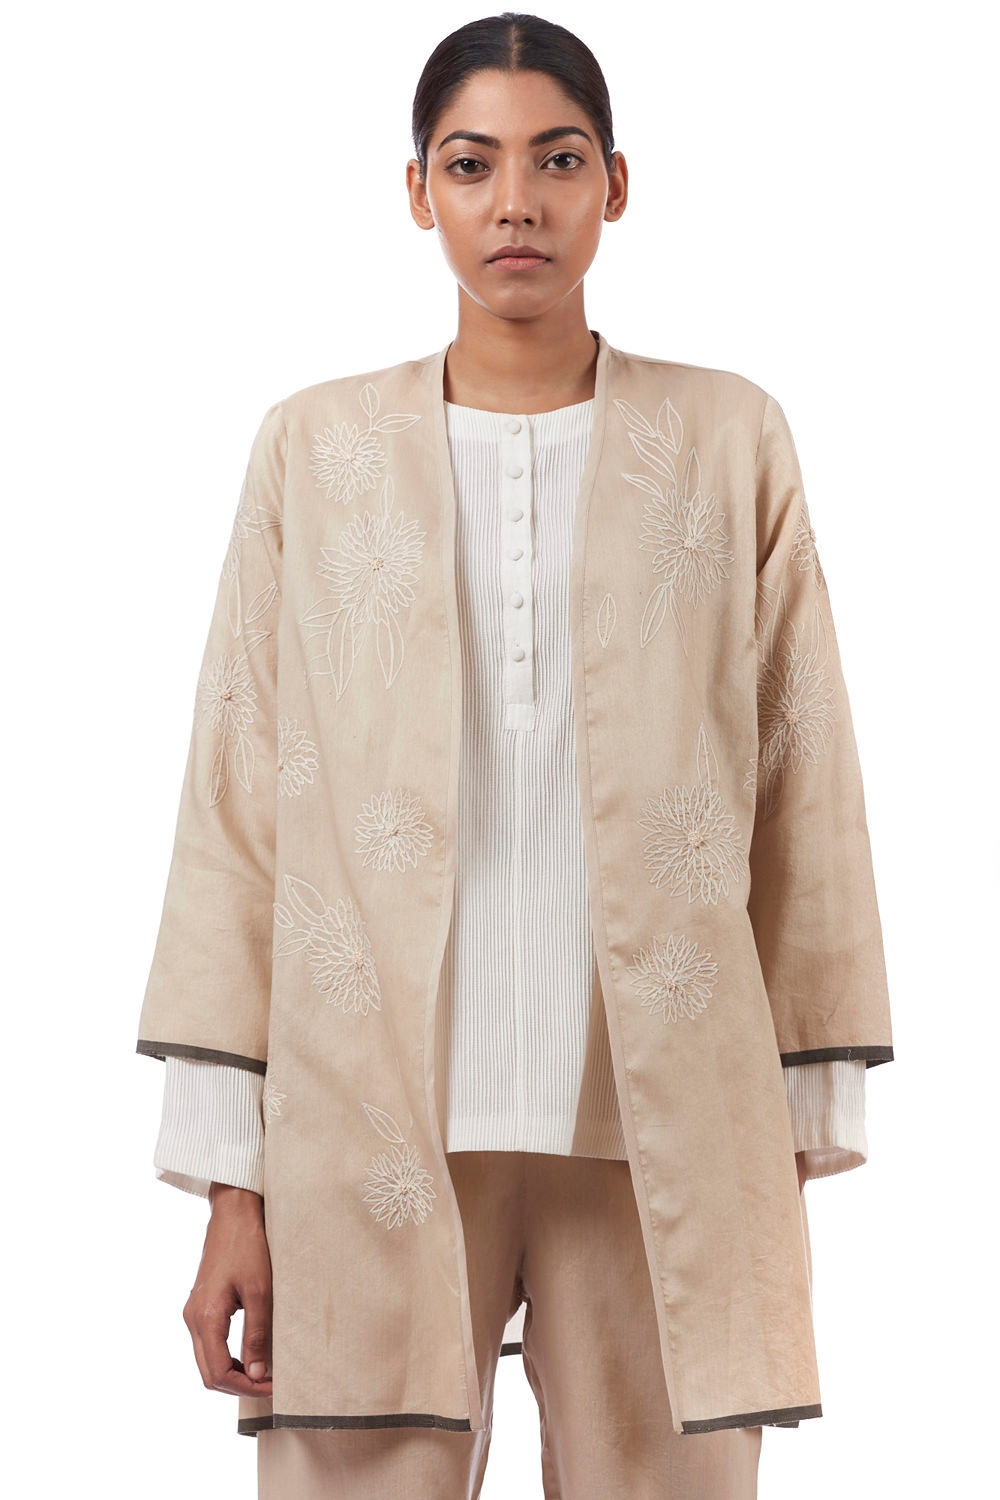 ABRAHAM AND THAKORE | Aari Embroidered Floral Maheshwar Kimono Jacket